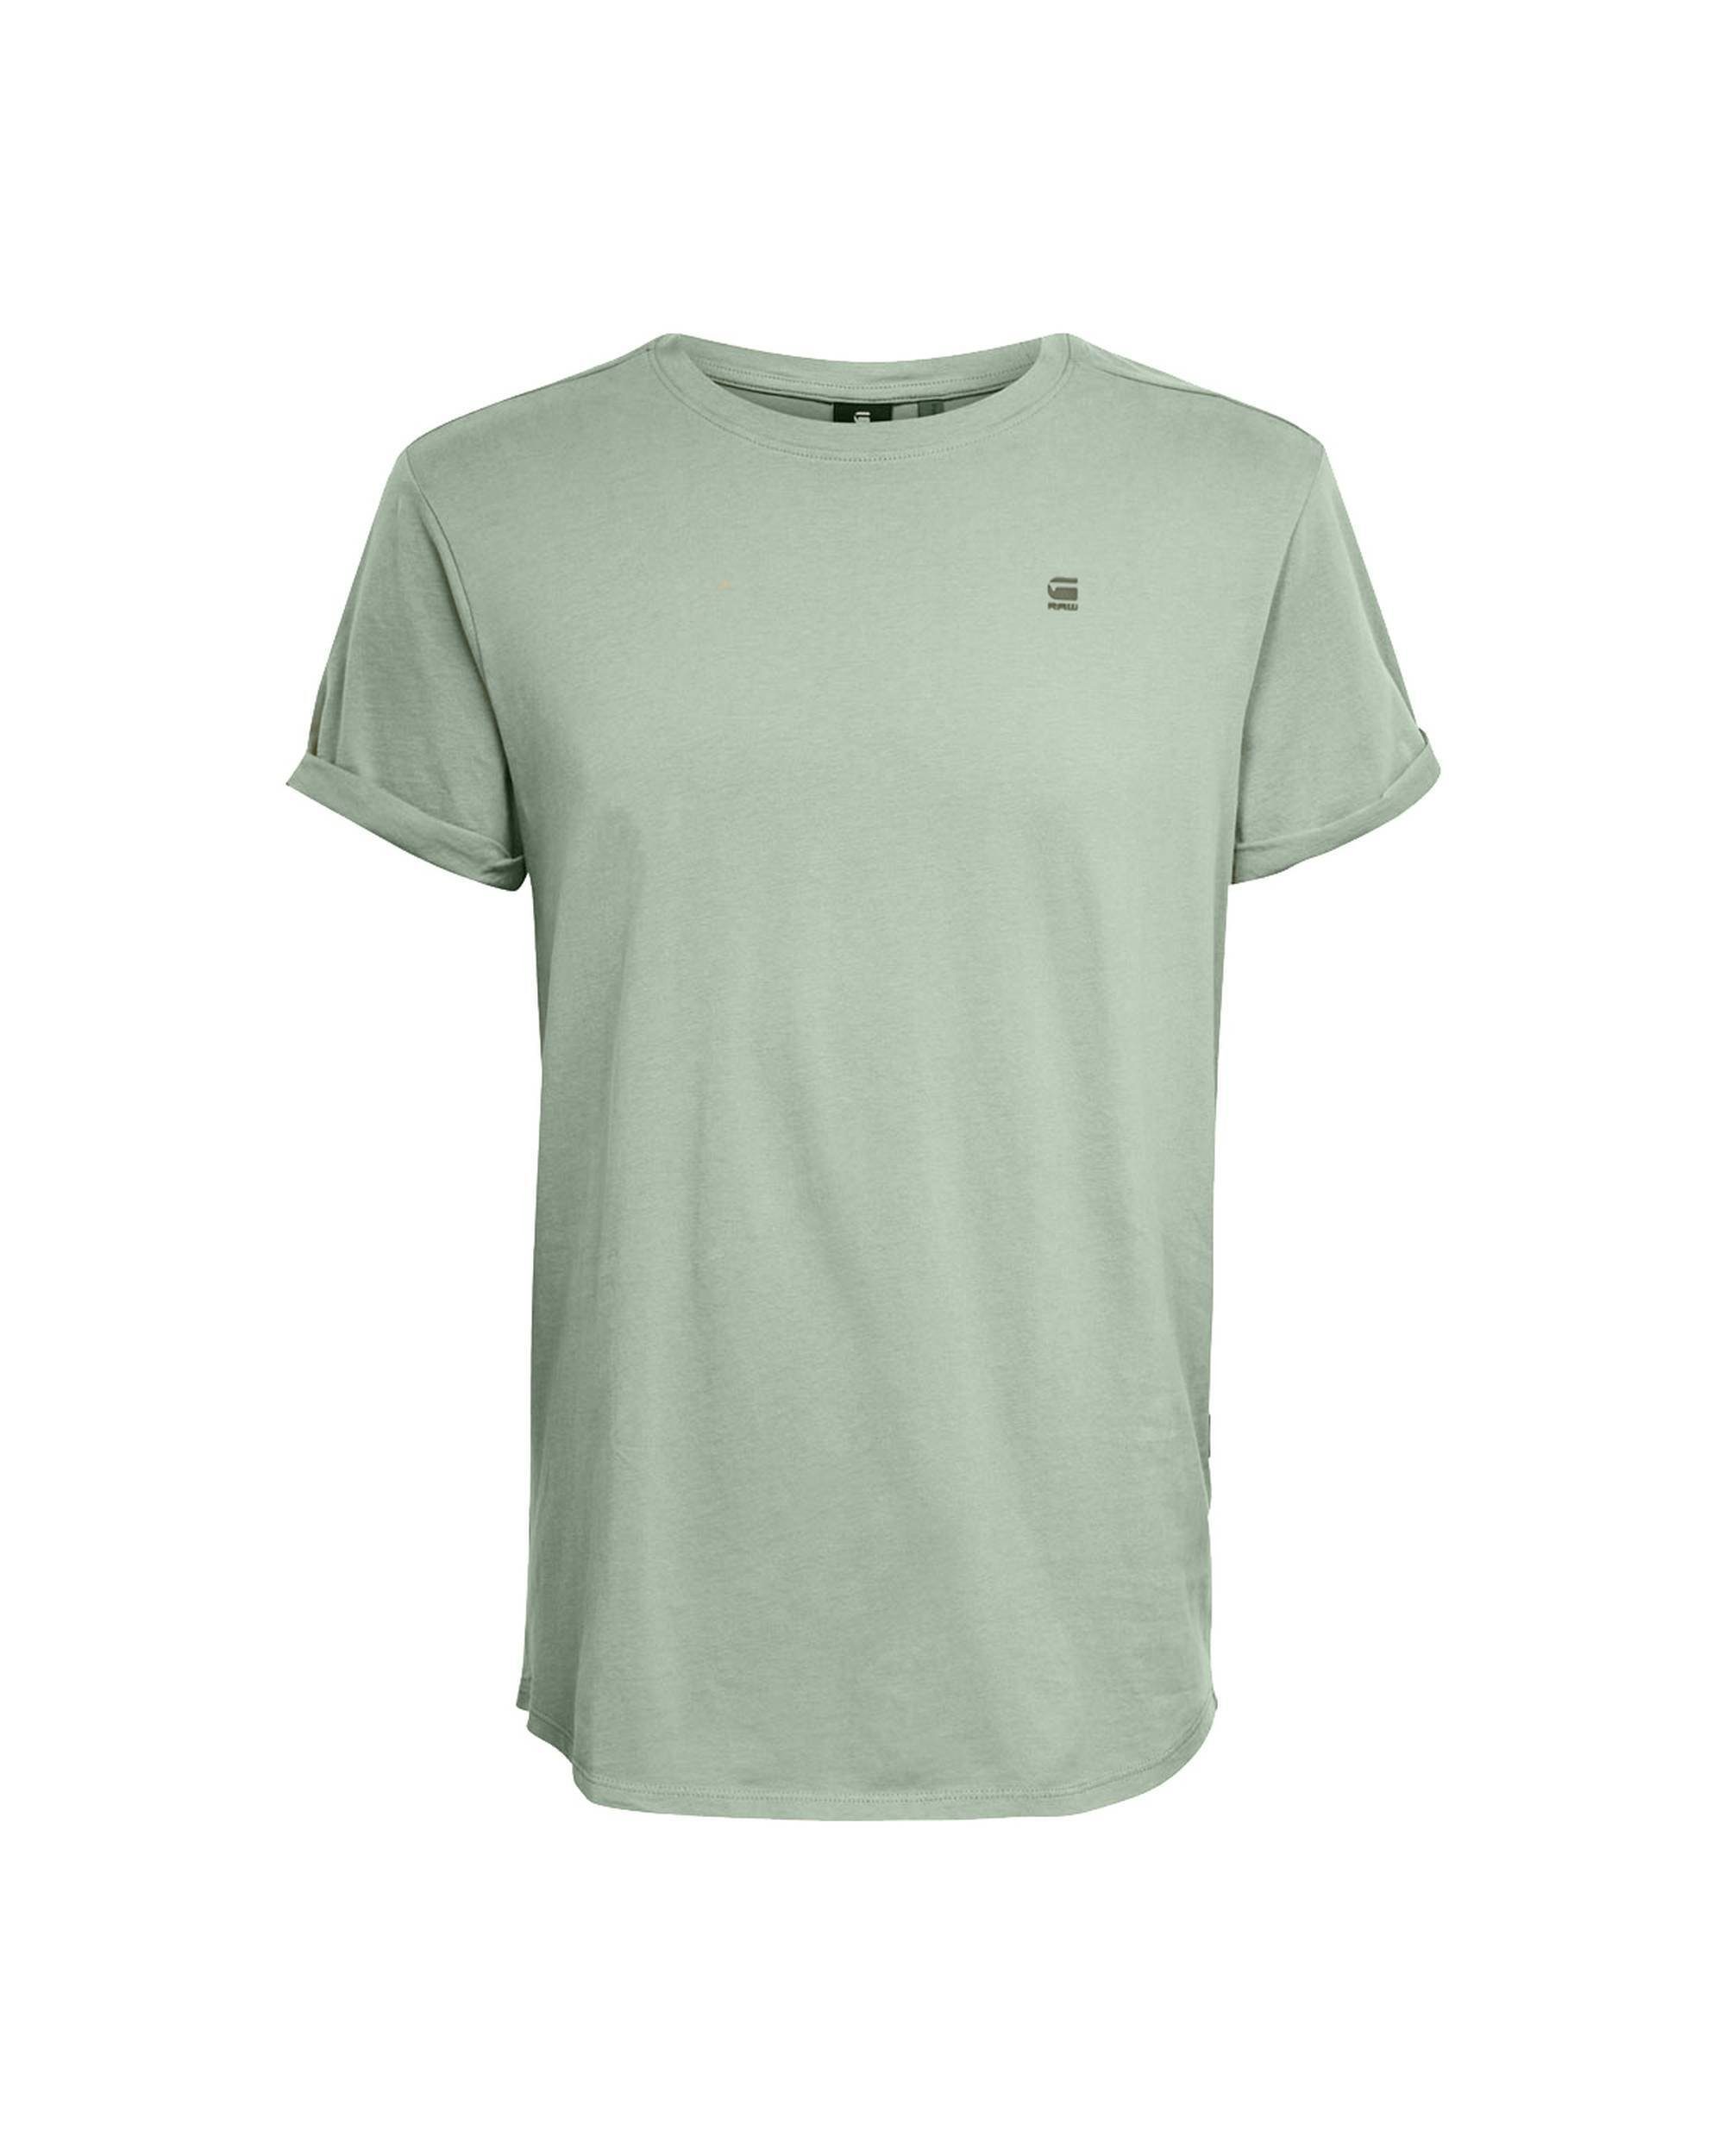 G-Star RAW T-Shirt Herren T-Shirt - Lash, Rundhals, Organic Cotton Mintgrün